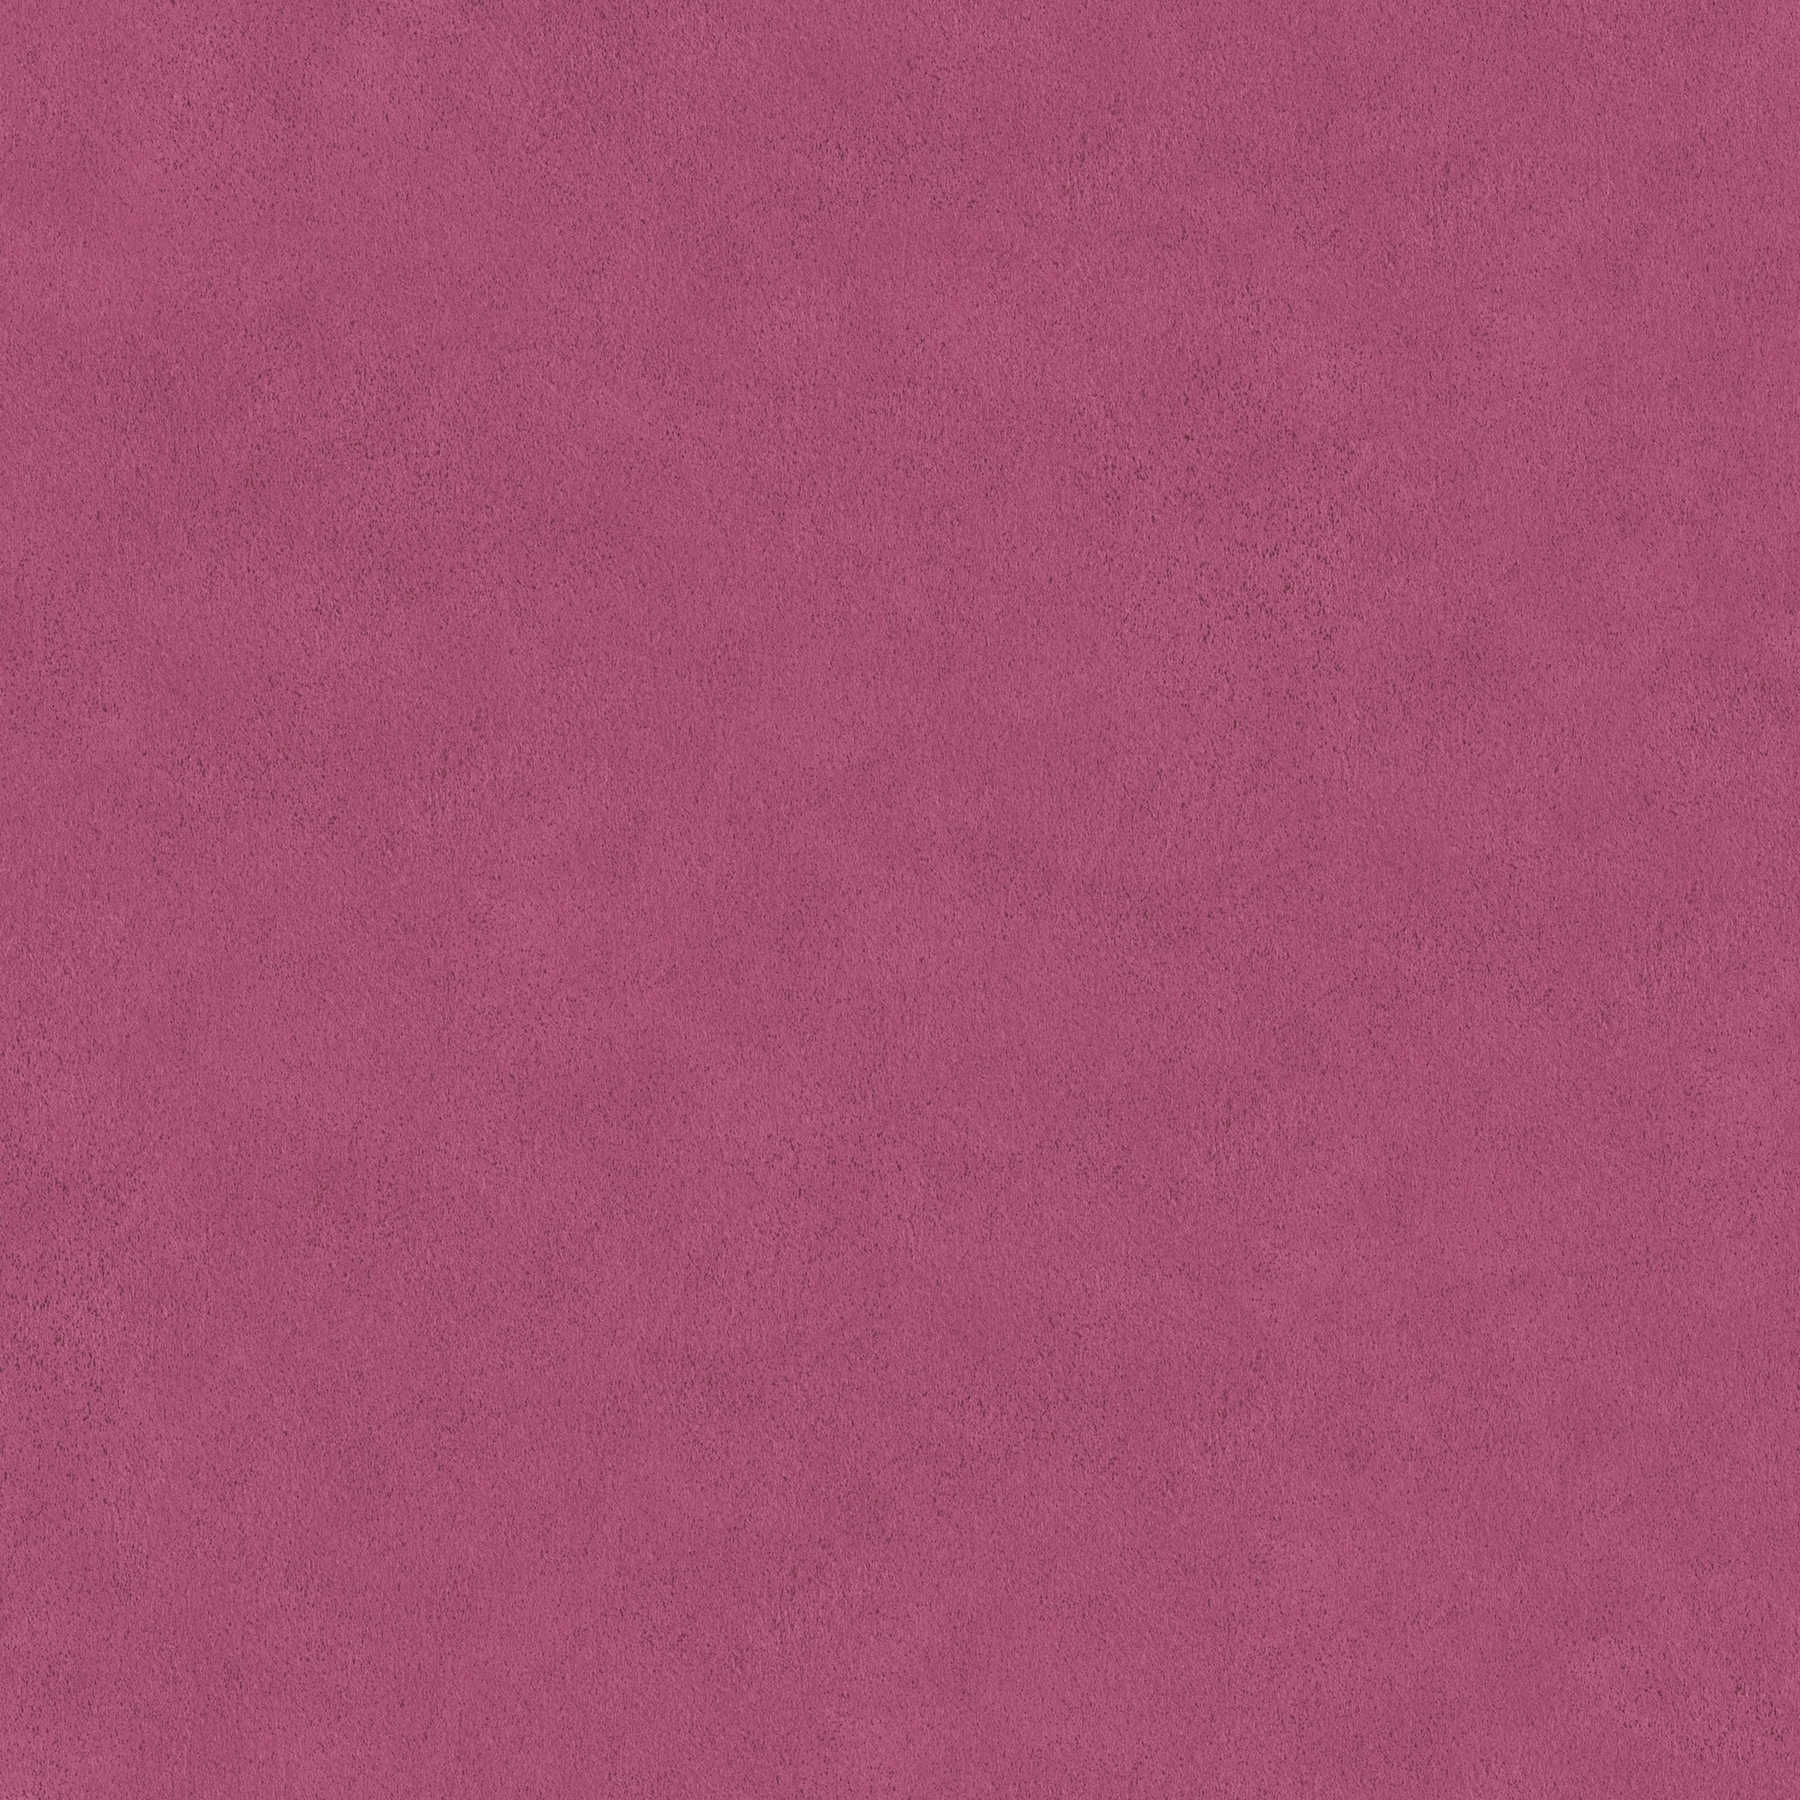 Plain wallpaper with fine mottled surface texture - purple
